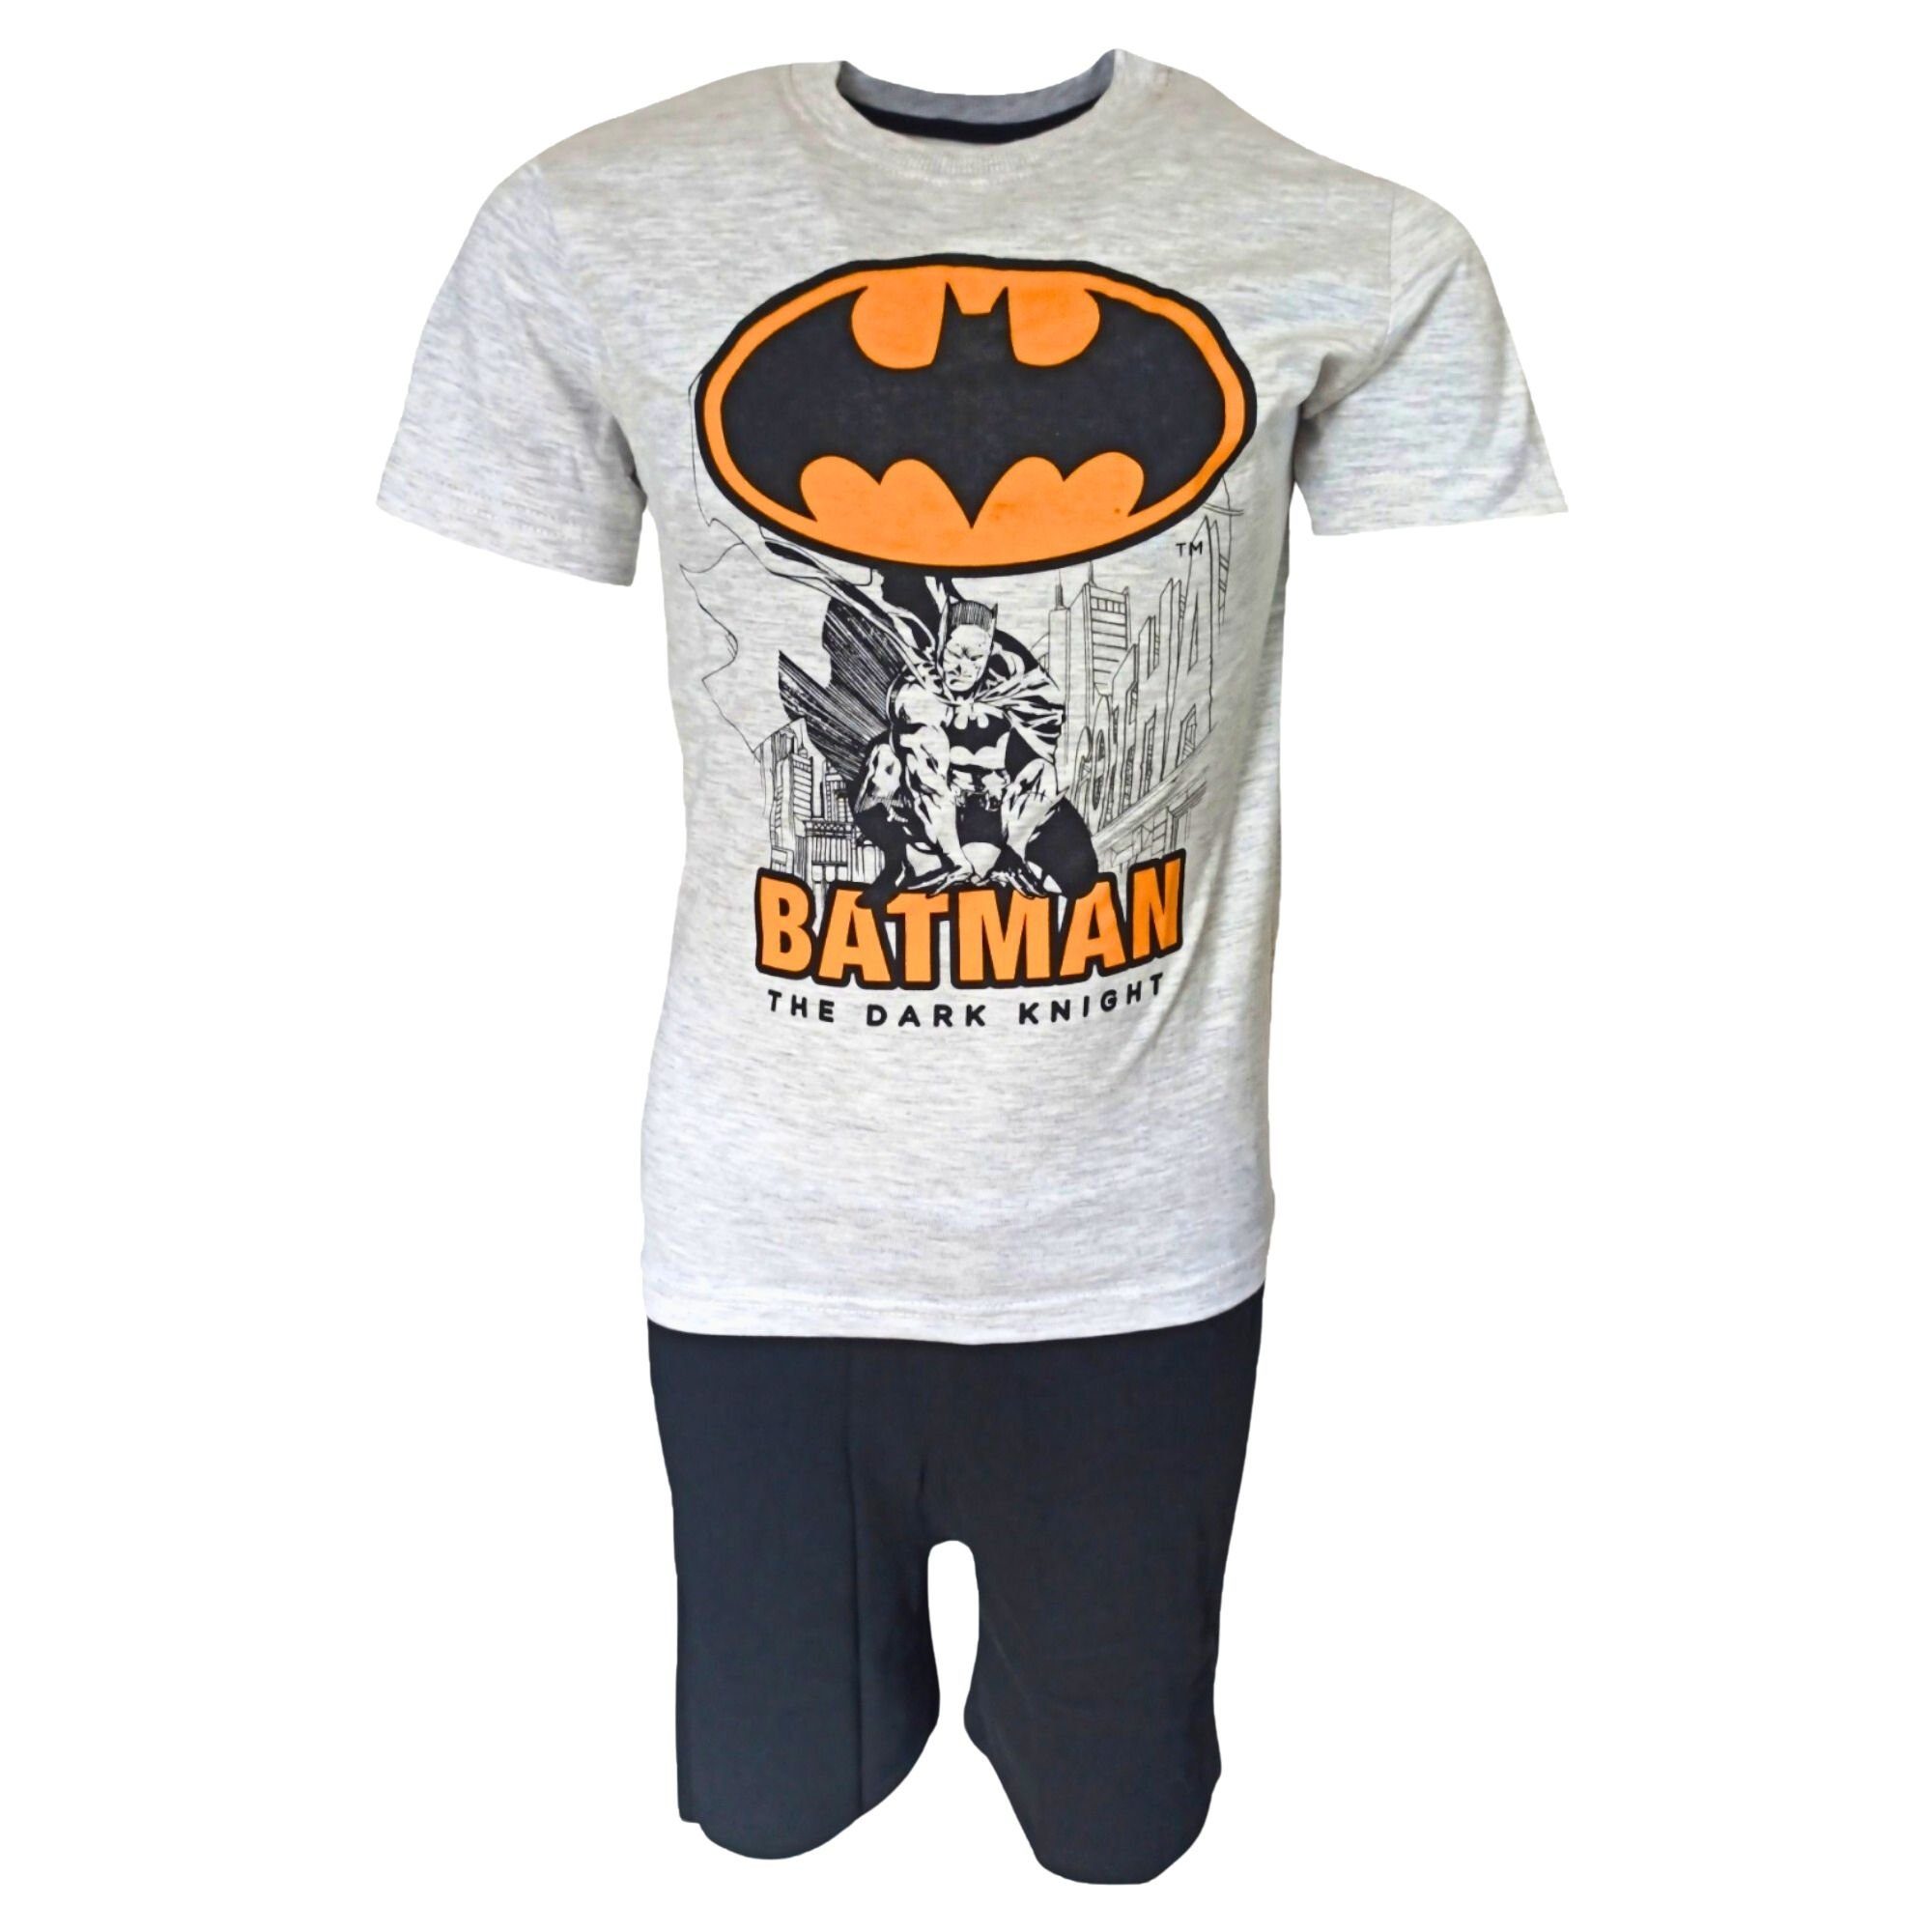 Batman Schlafanzug KNIGHT 104-134 Jungen (2 Shorty Pyjama kurzarm Gr. Grau-Schwarz tlg) THE - DARK cm